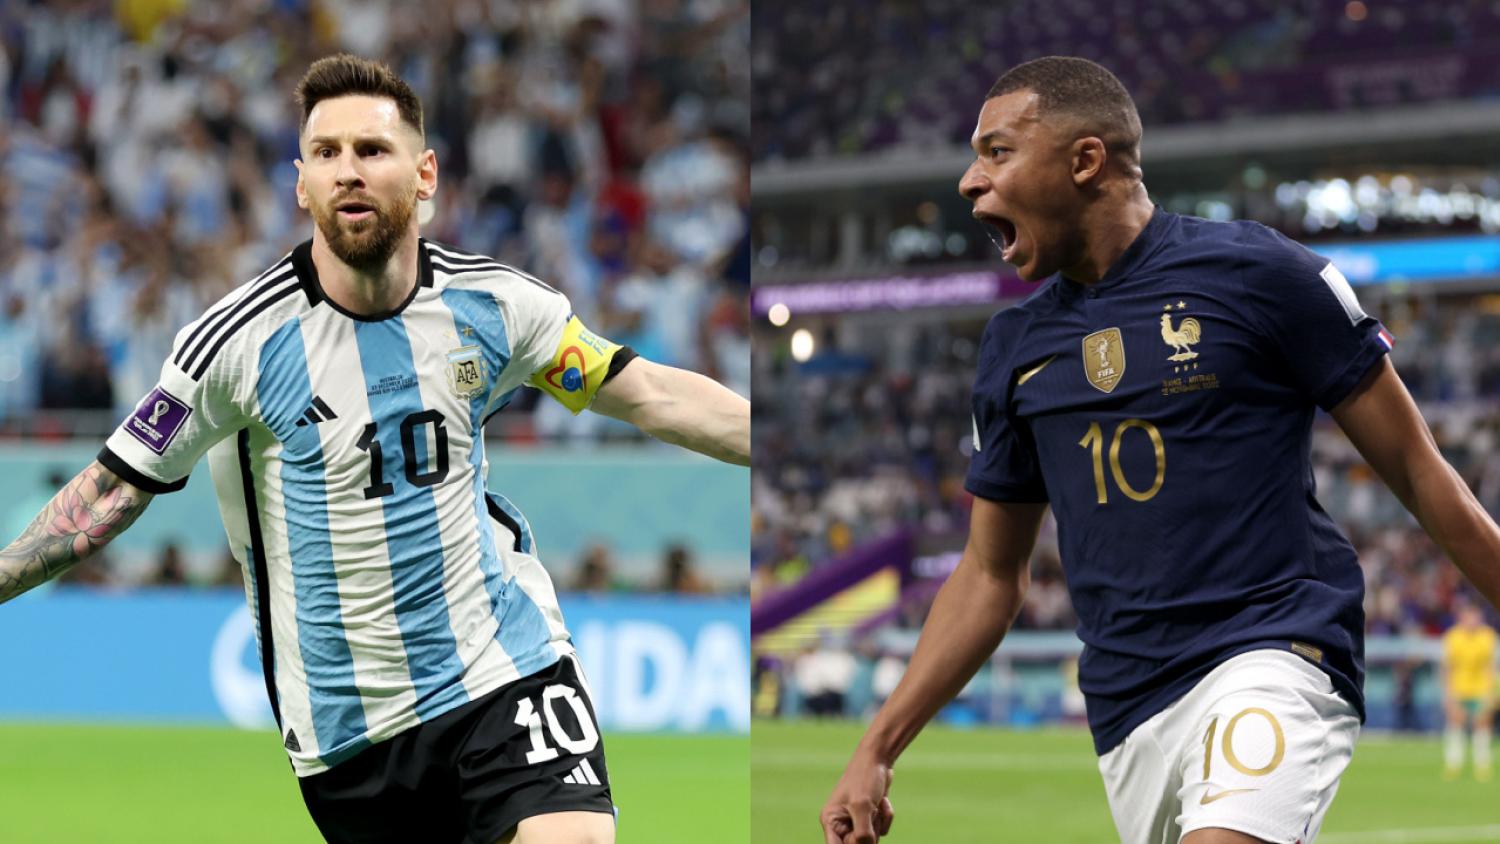 2022 World Cup final odds for France vs Argentina